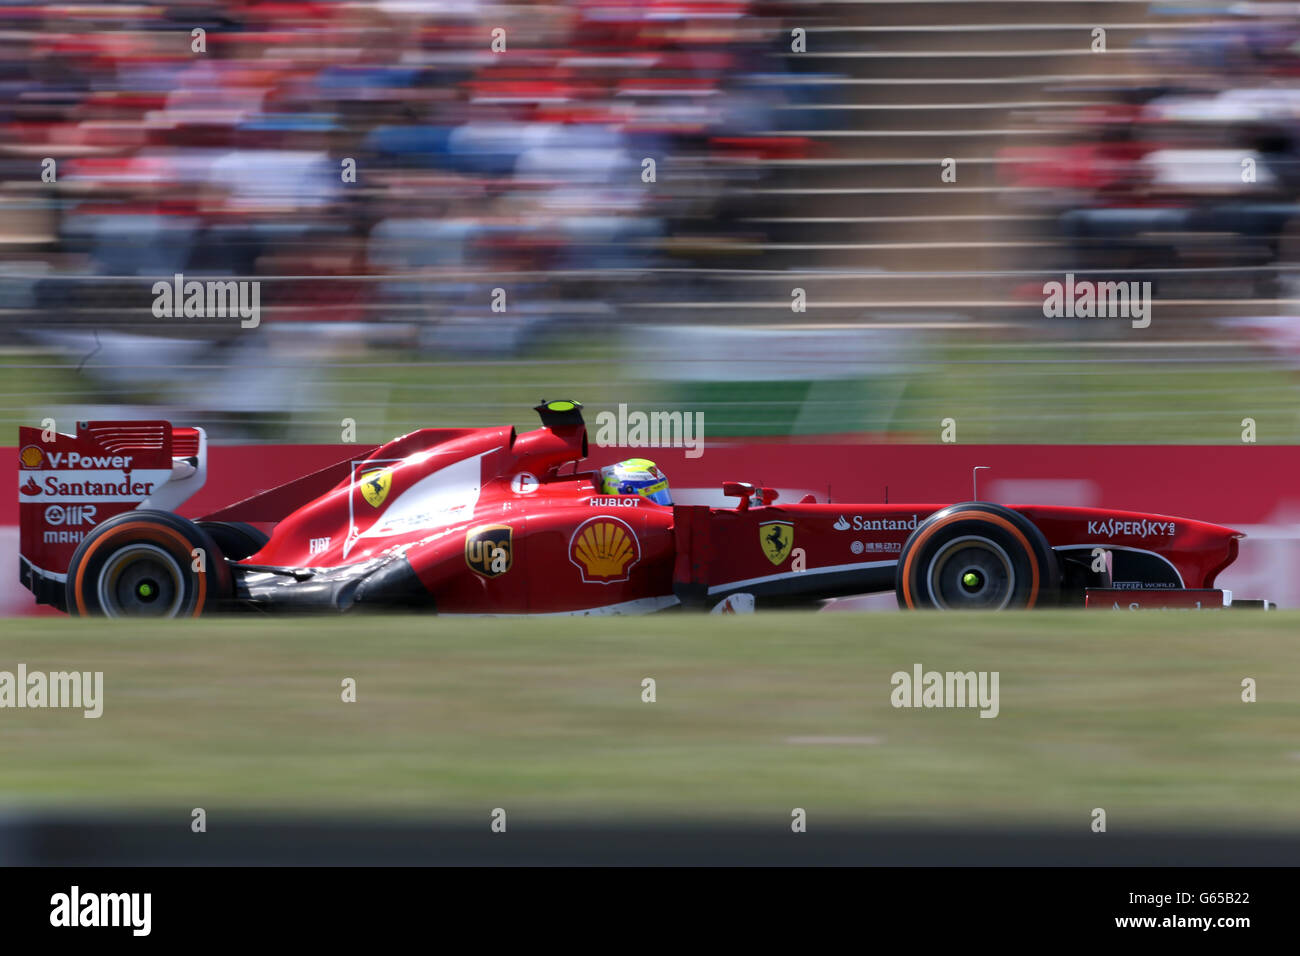 Ferrari's Felipe Massa during the Spainish Grand Prix Stock Photo